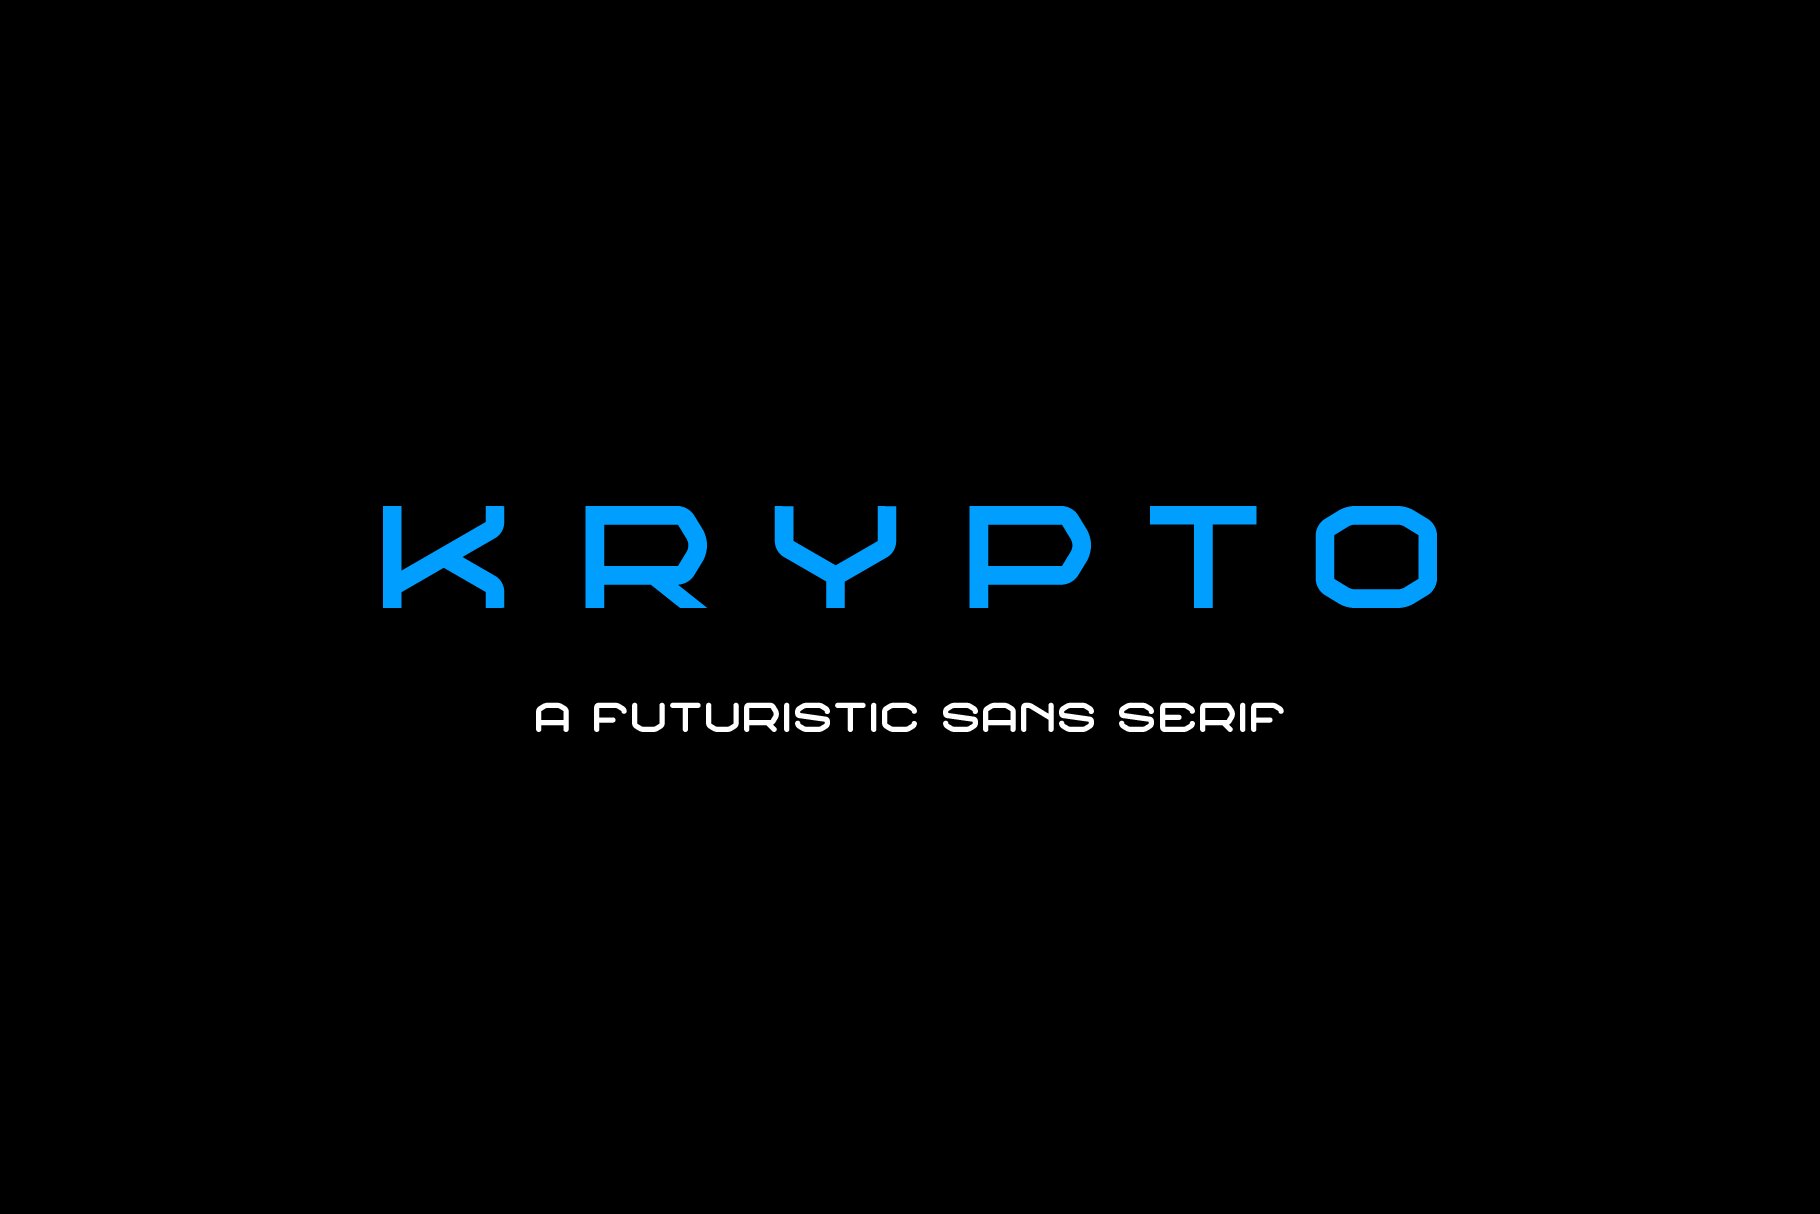 Krypto cover image.